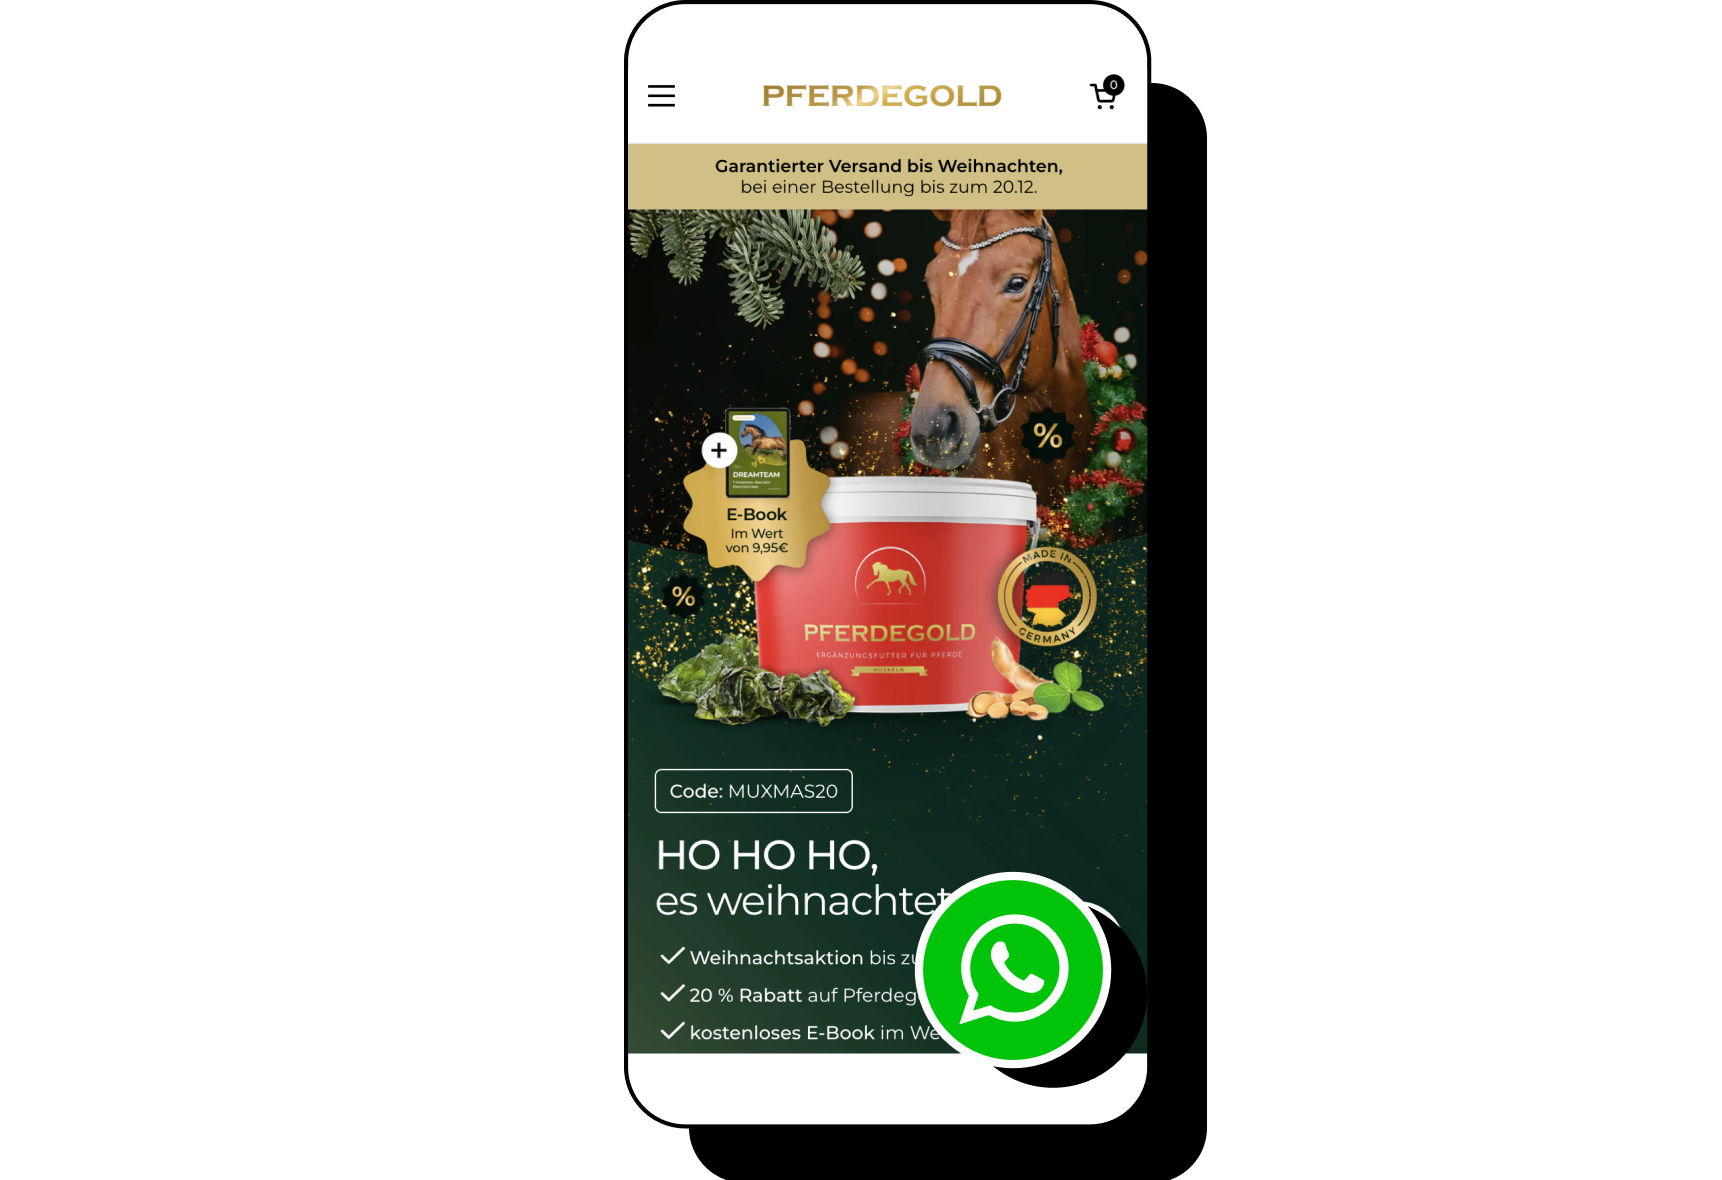 Pferdegold WhatsApp campaign message